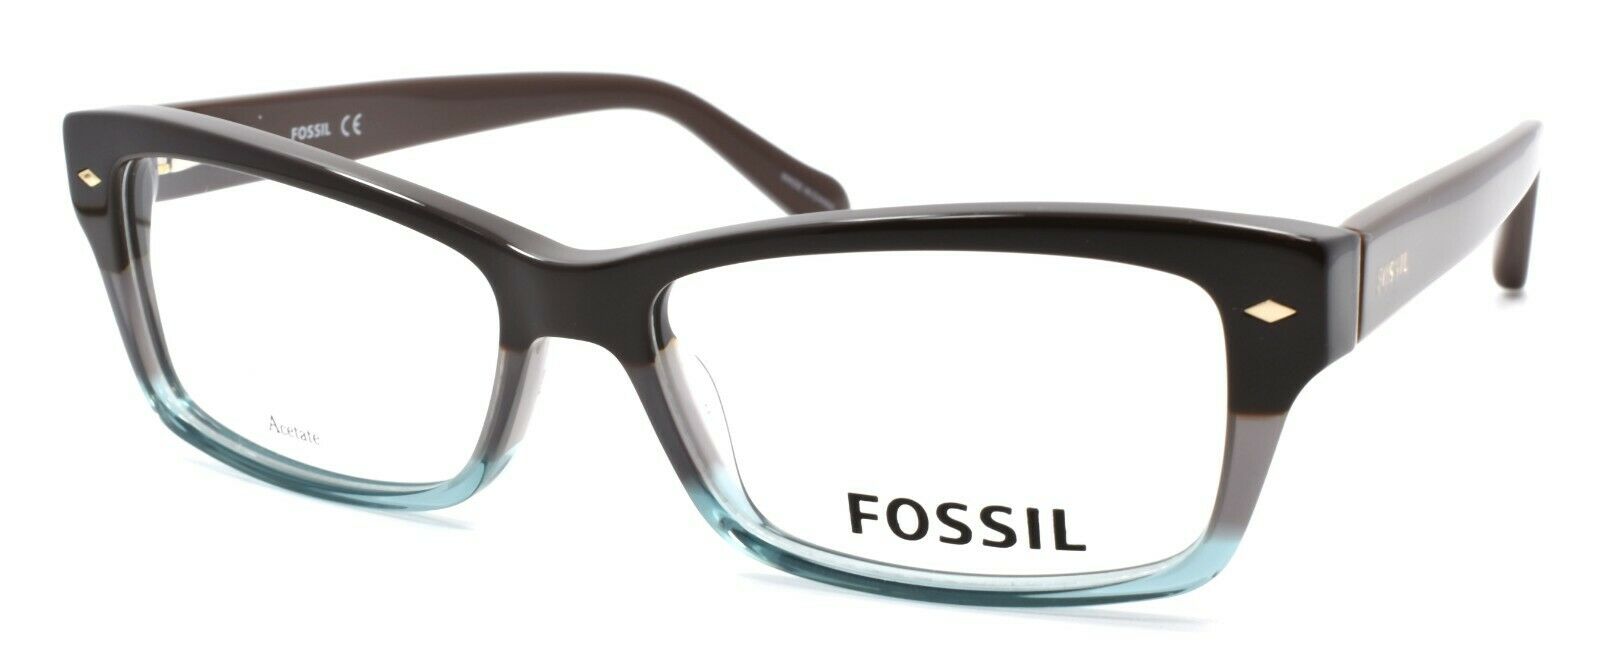 1-Fossil FOS 6066 RRB Women's Eyeglasses Frames 52-15-135 Brown Gray Green-827886591770-IKSpecs